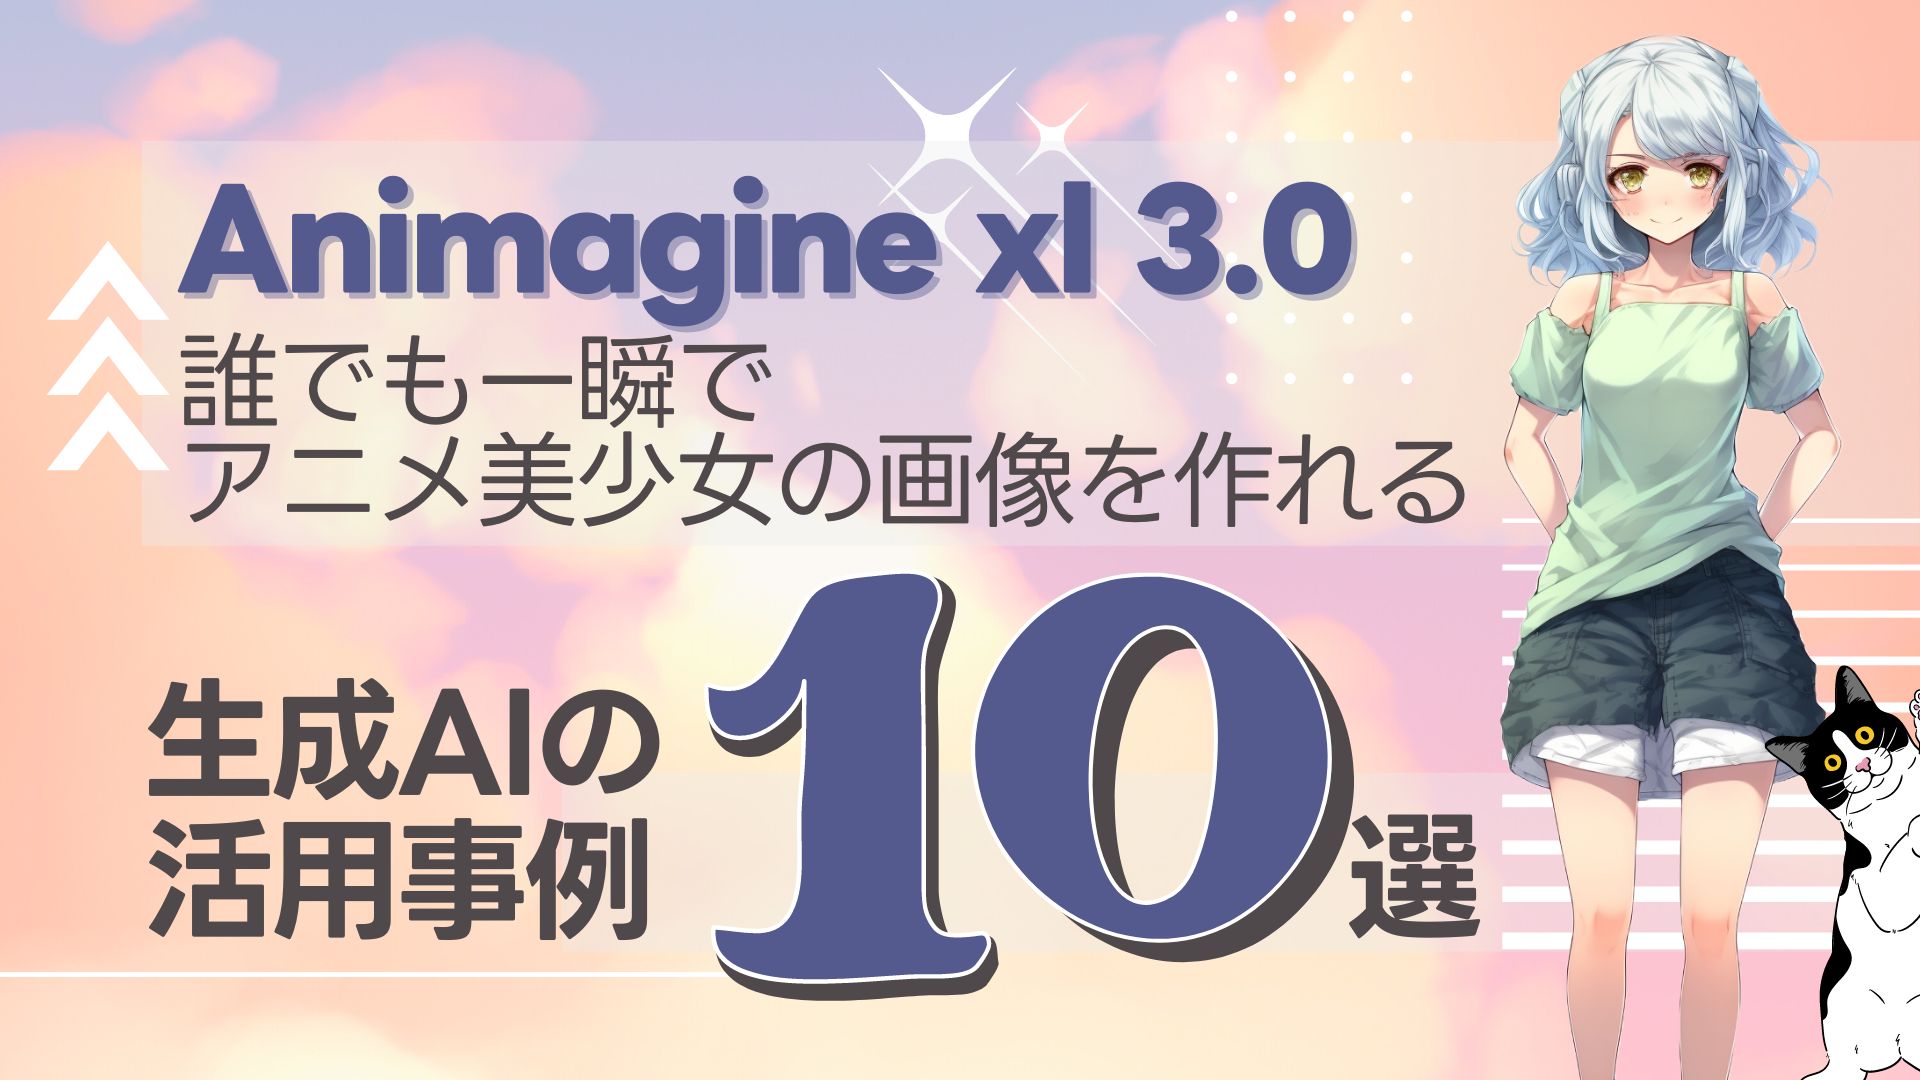 Animagine-xl-3.0 アニメ 画像 生成AI 活用事例